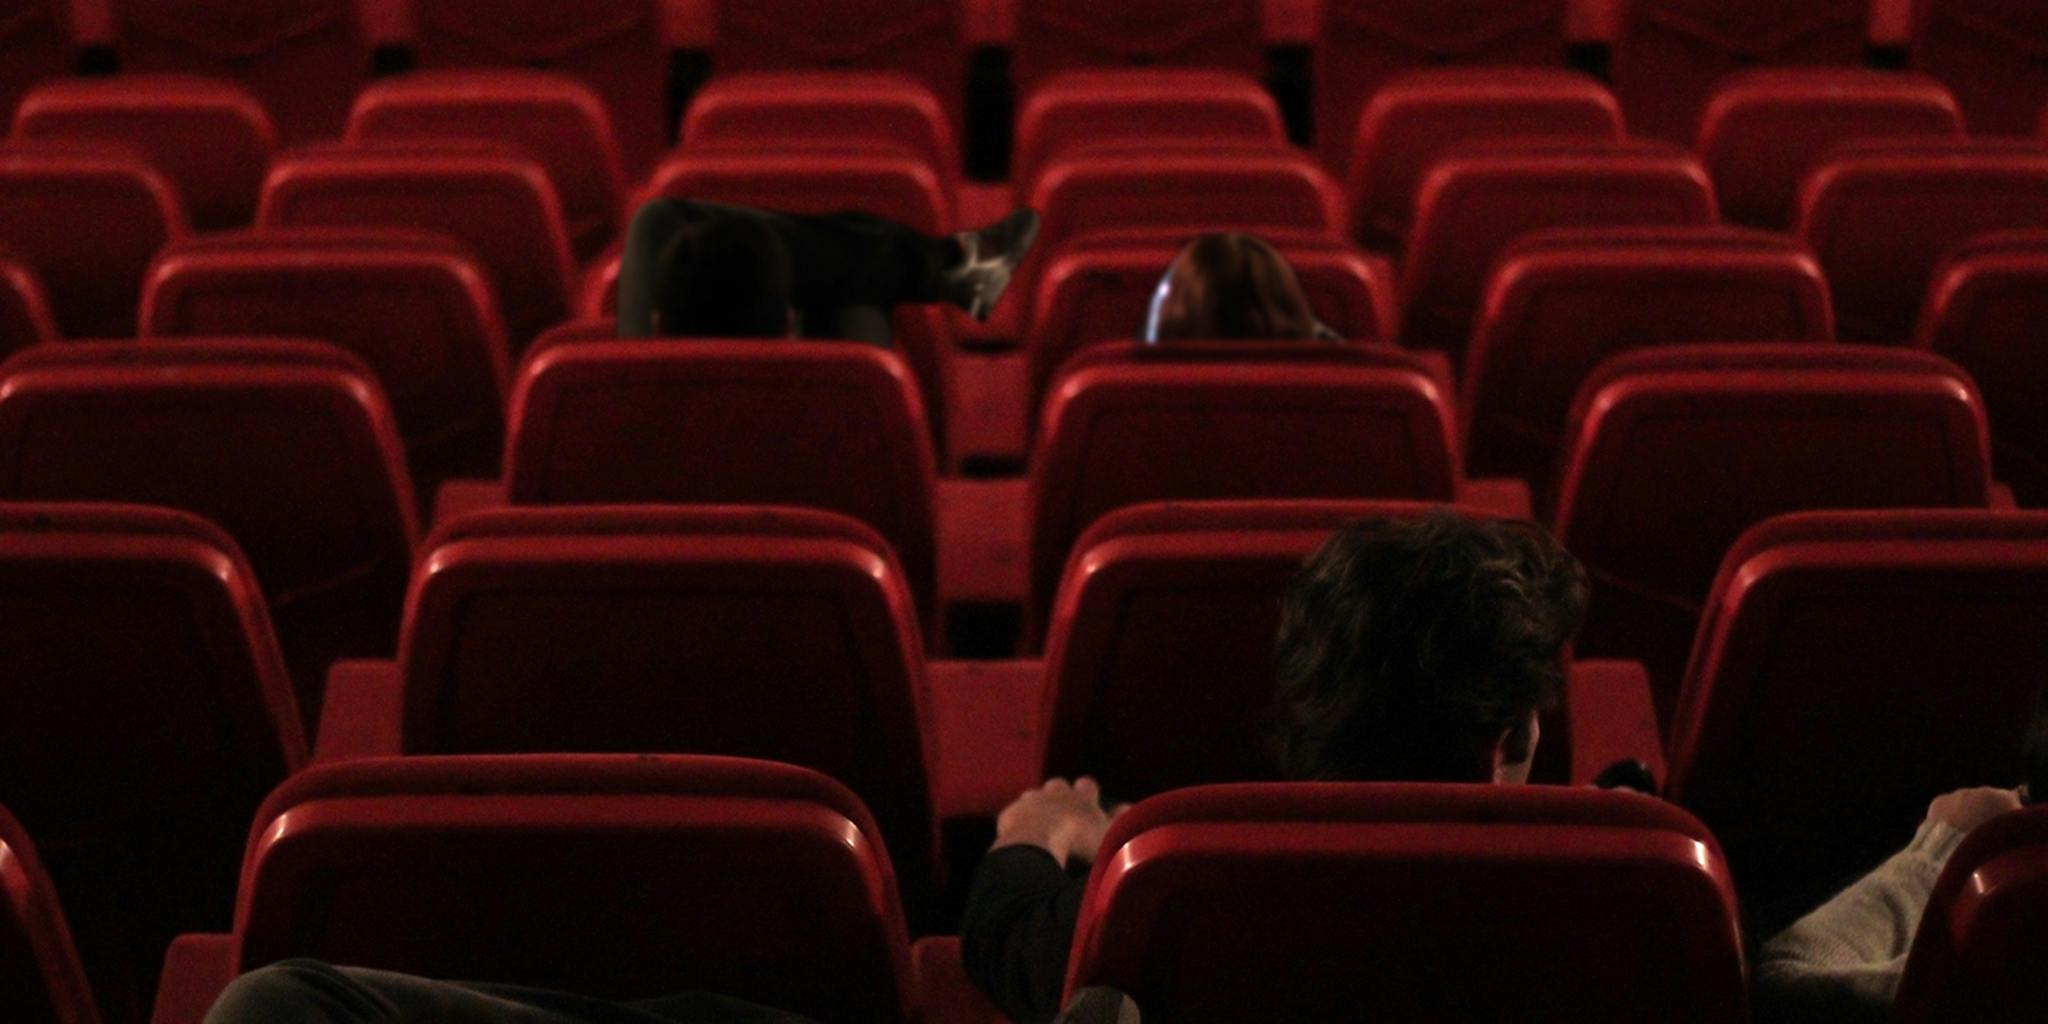 The cinema is than the library. Многозальный кинотеатр фото. Филион кинотеатр зал 10 фото. Как двигается кресло в кинотеатре. This is Cinema.